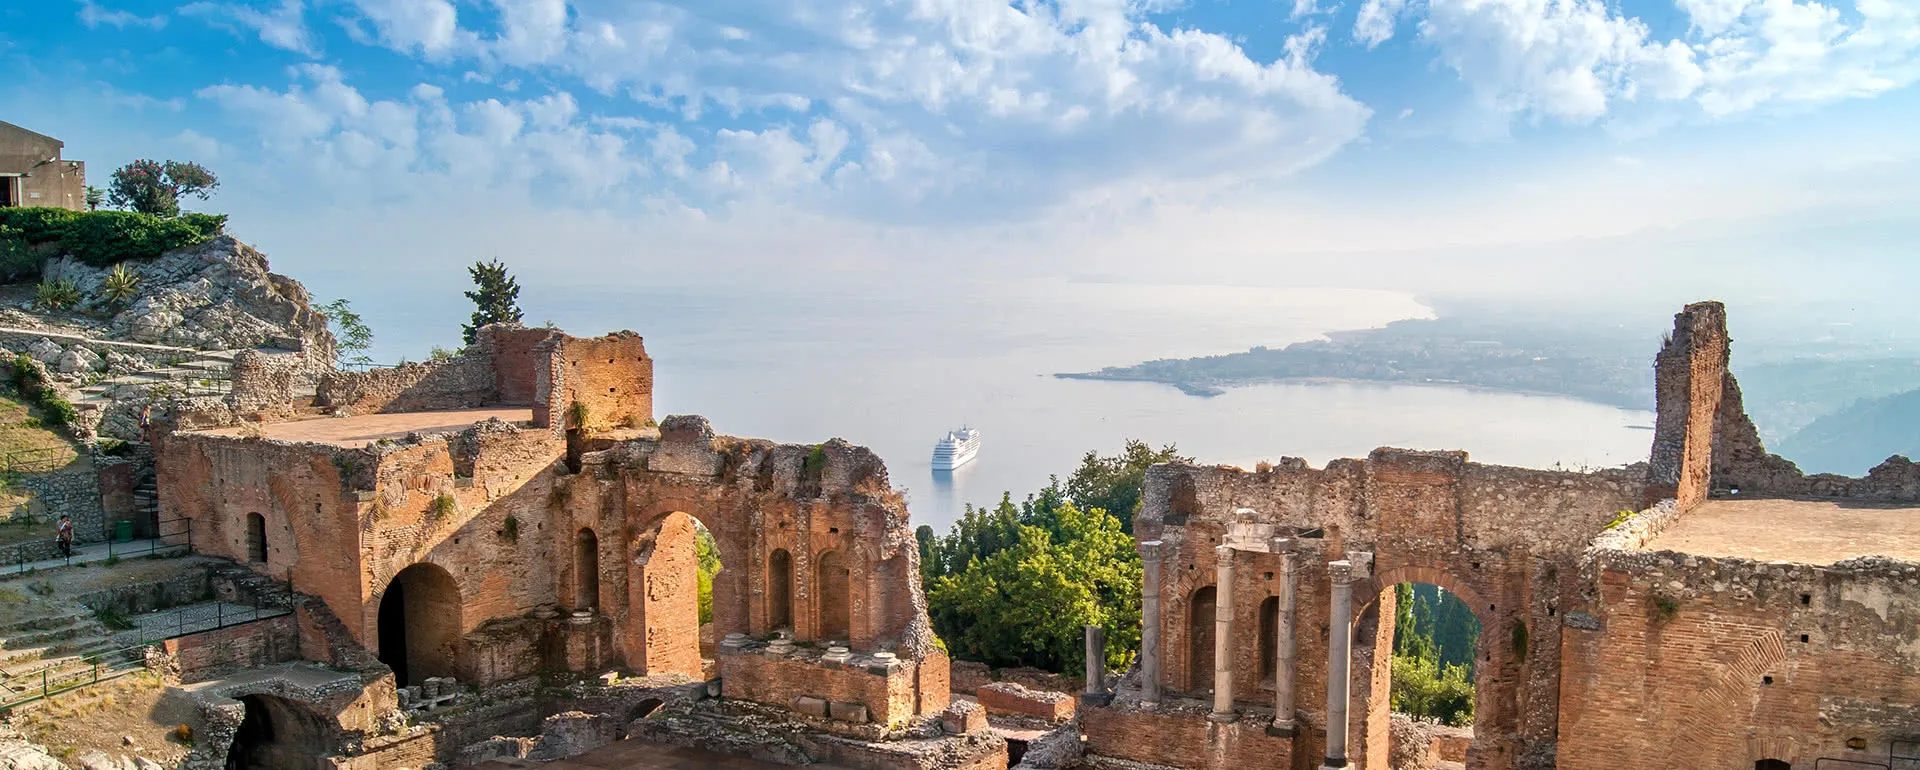 Taormina - the destination for company trips